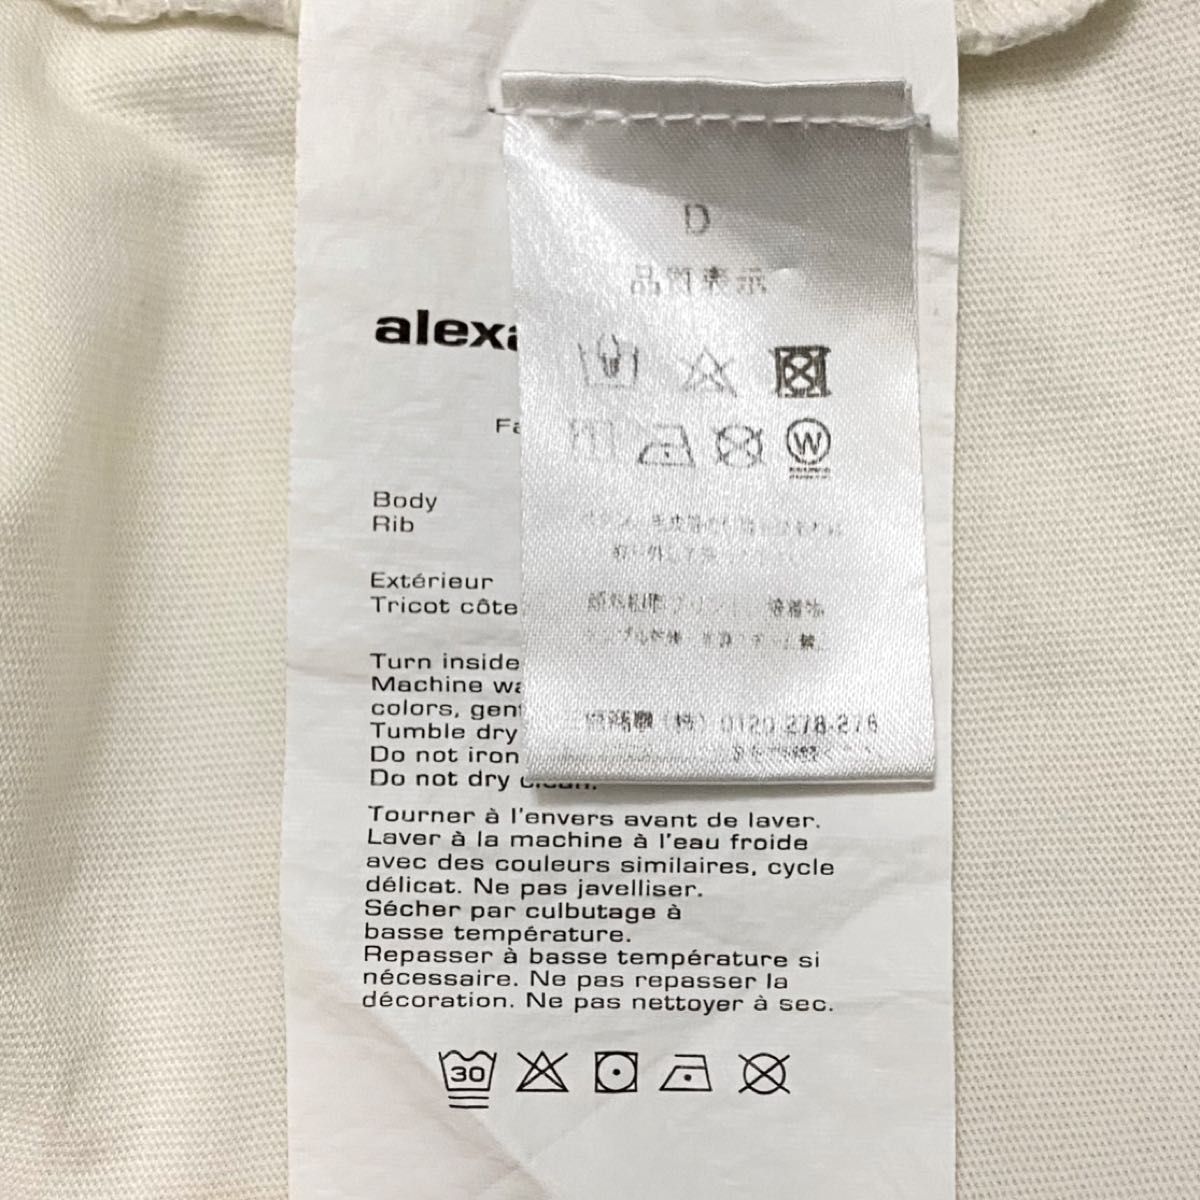 ALEXANDER WANG アレキサンダー ワン ロゴ 半袖 Tシャツ Tee トップス カットソー T Shirt Sサイズ